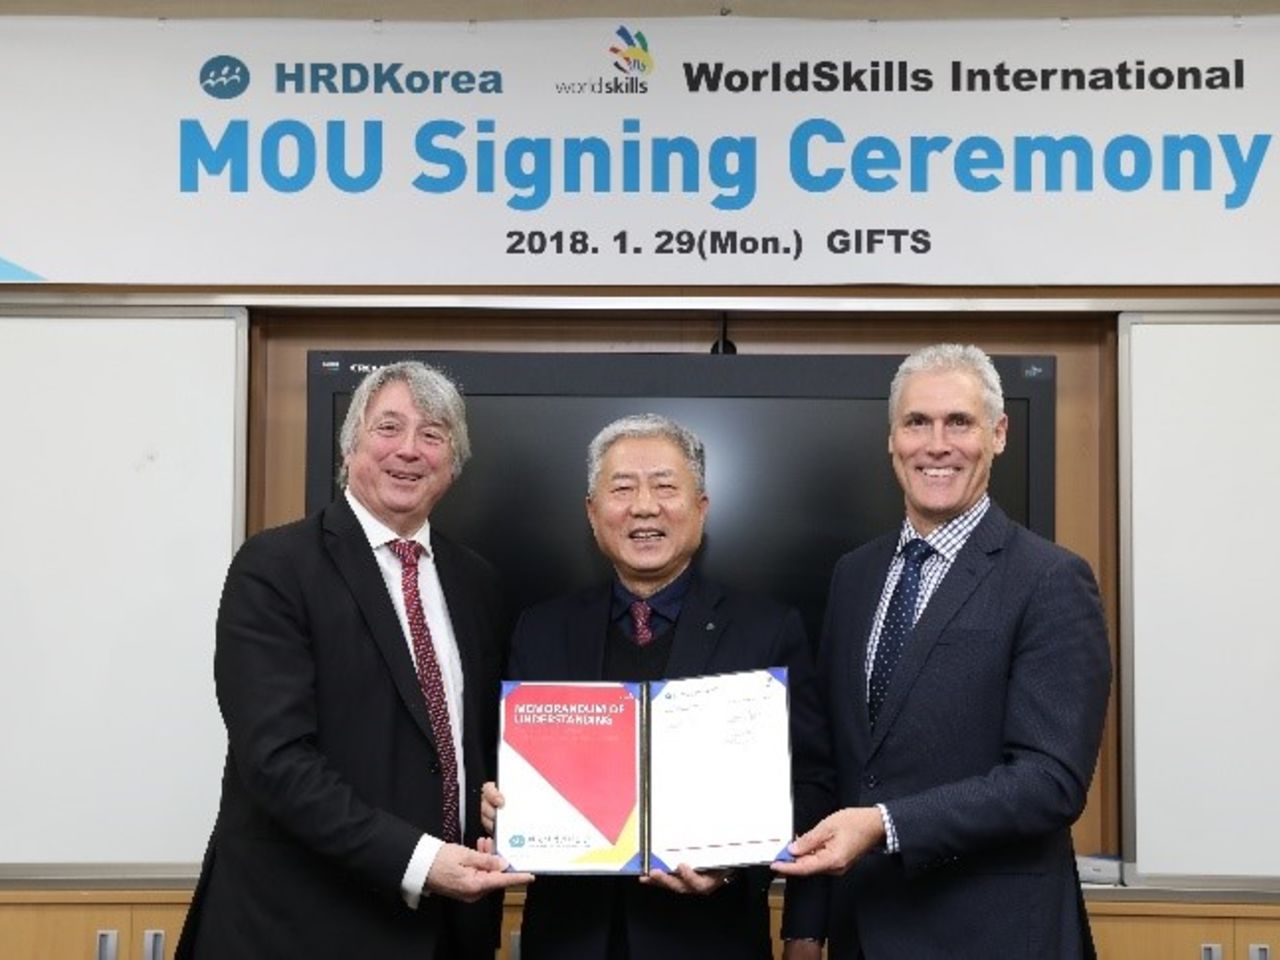 WorldSkills International Capacity Building Centre in Korea will spearhead skills development around the globe